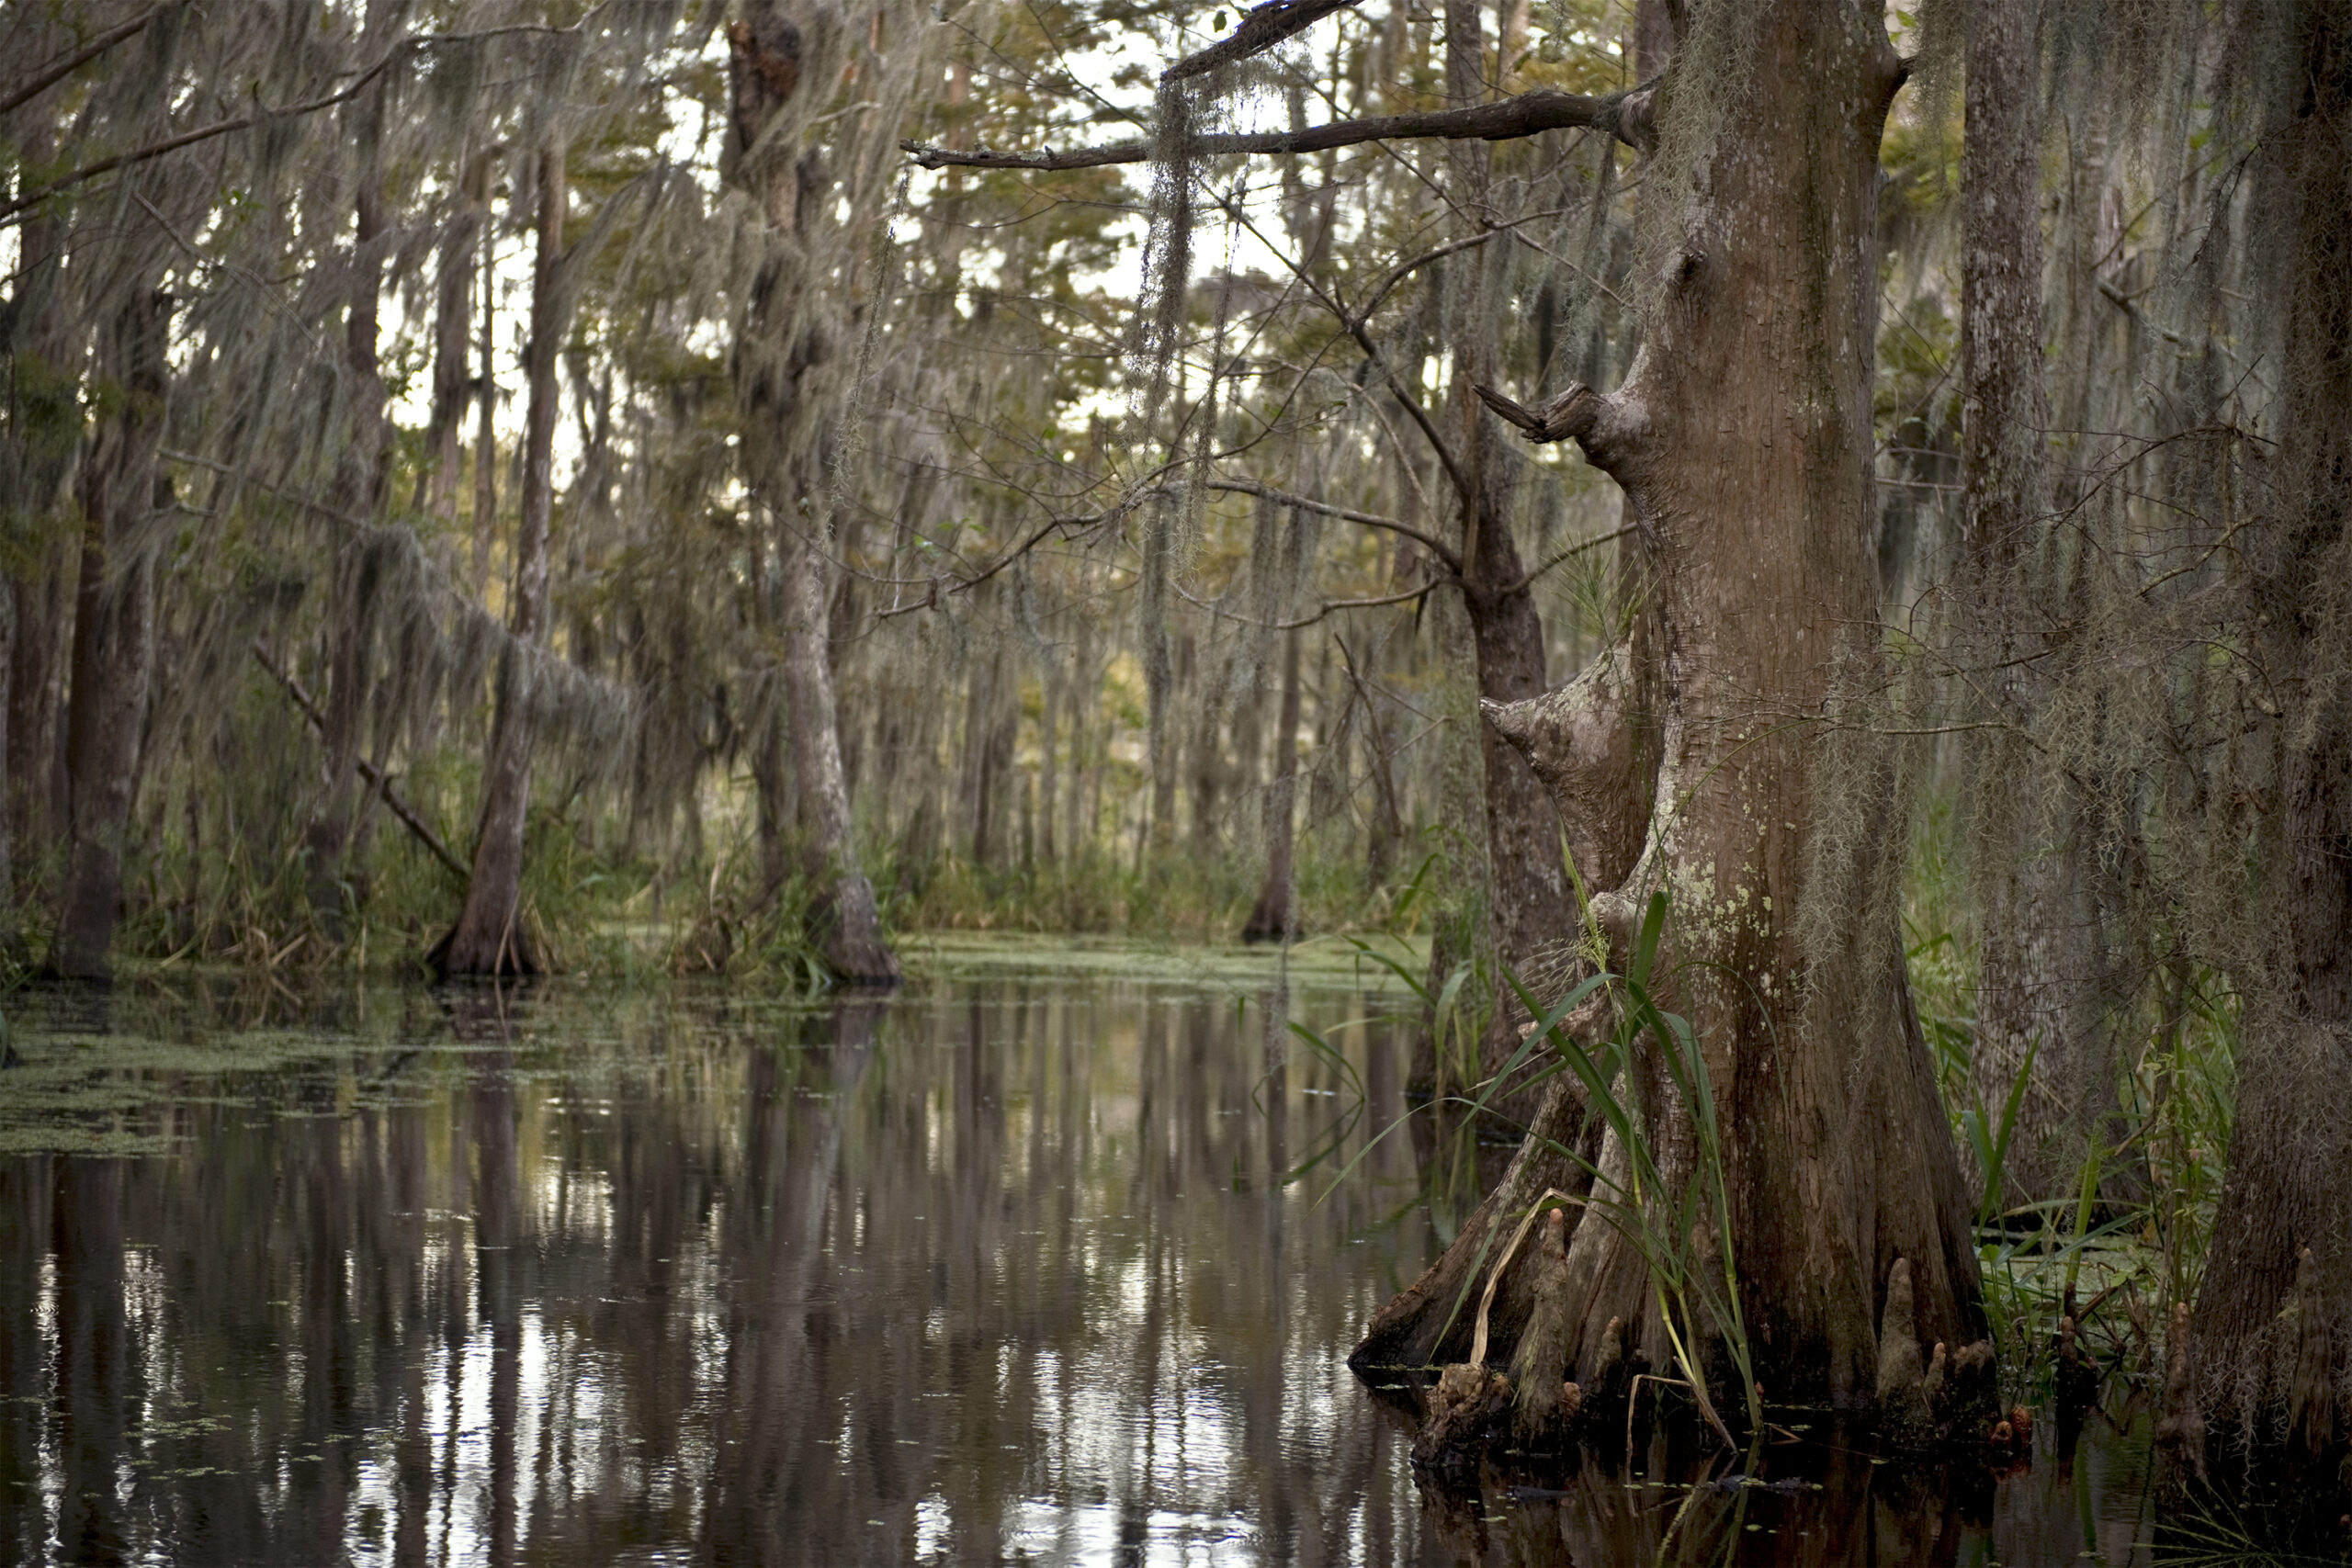 bayou swamp tour near new orleans